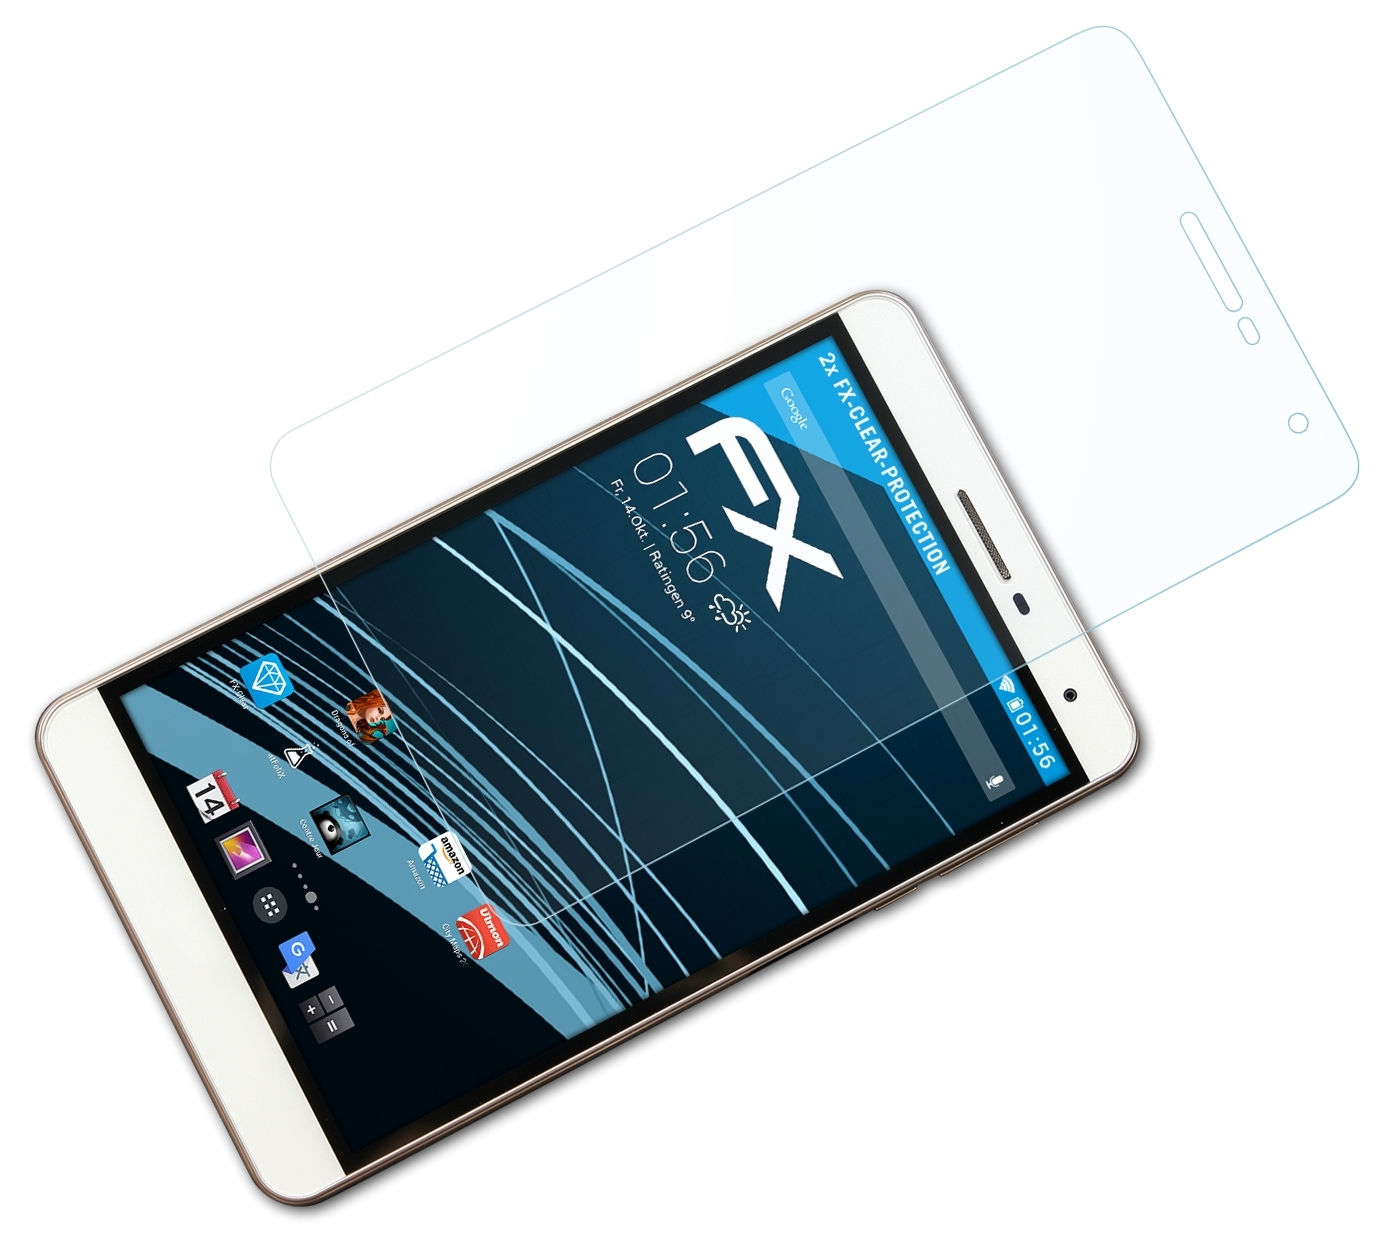 2x Huawei T2 FX-Clear ATFOLIX MediaPad Displayschutz(für Pro) 7.0